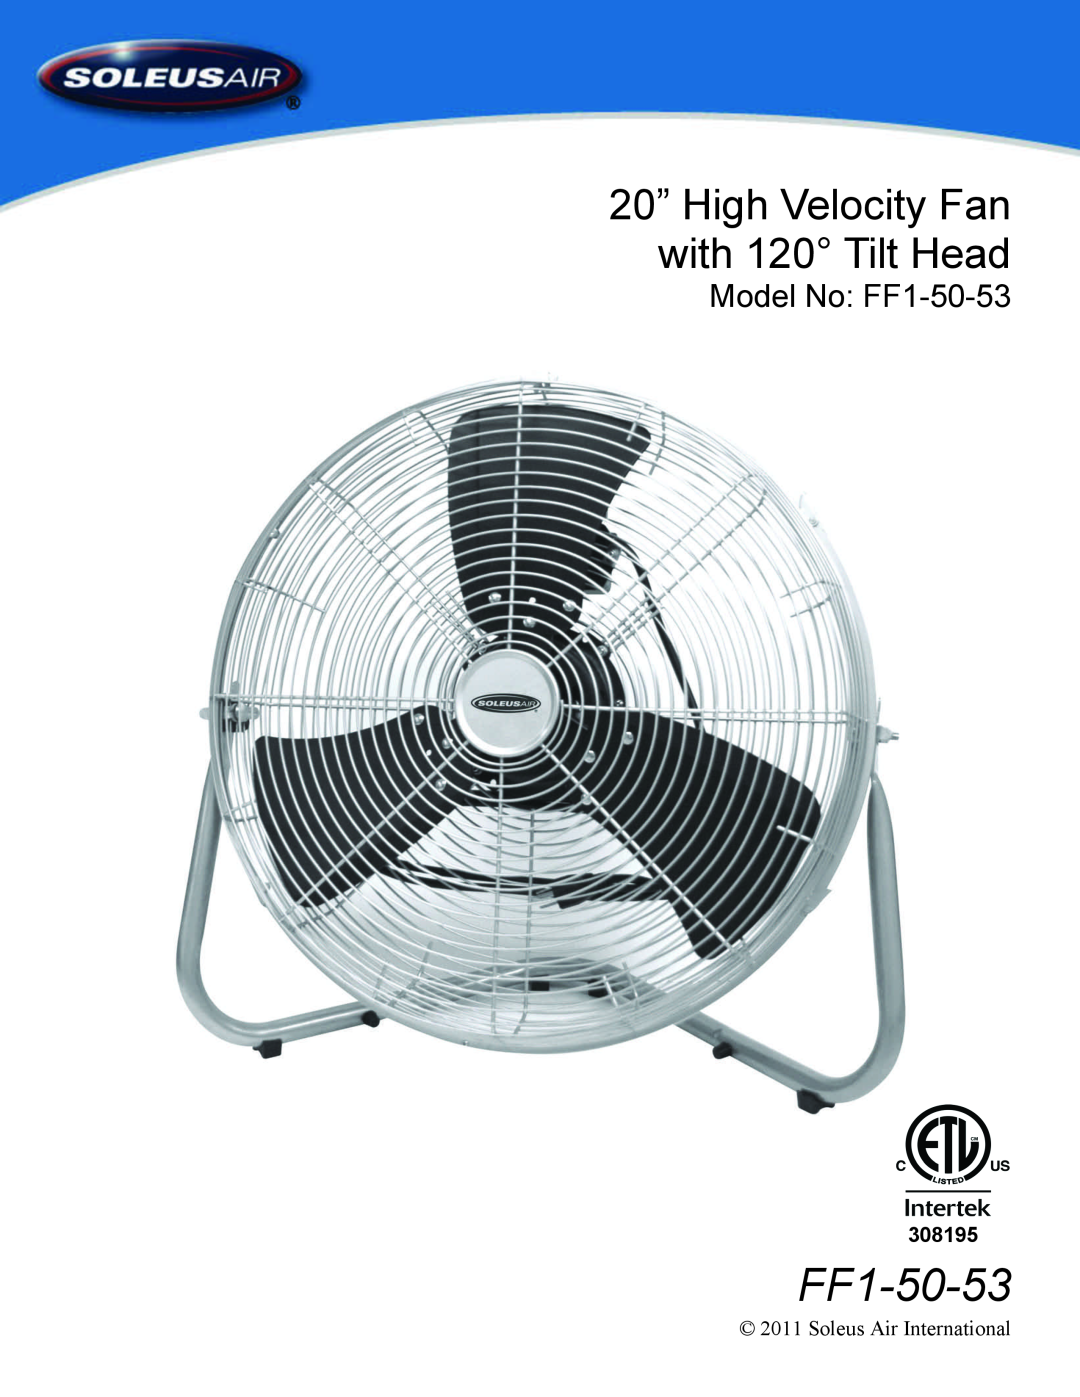 Soleus Air manual 20” High Velocity Fan with 120 Tilt Head, Model No FF1-50-53 